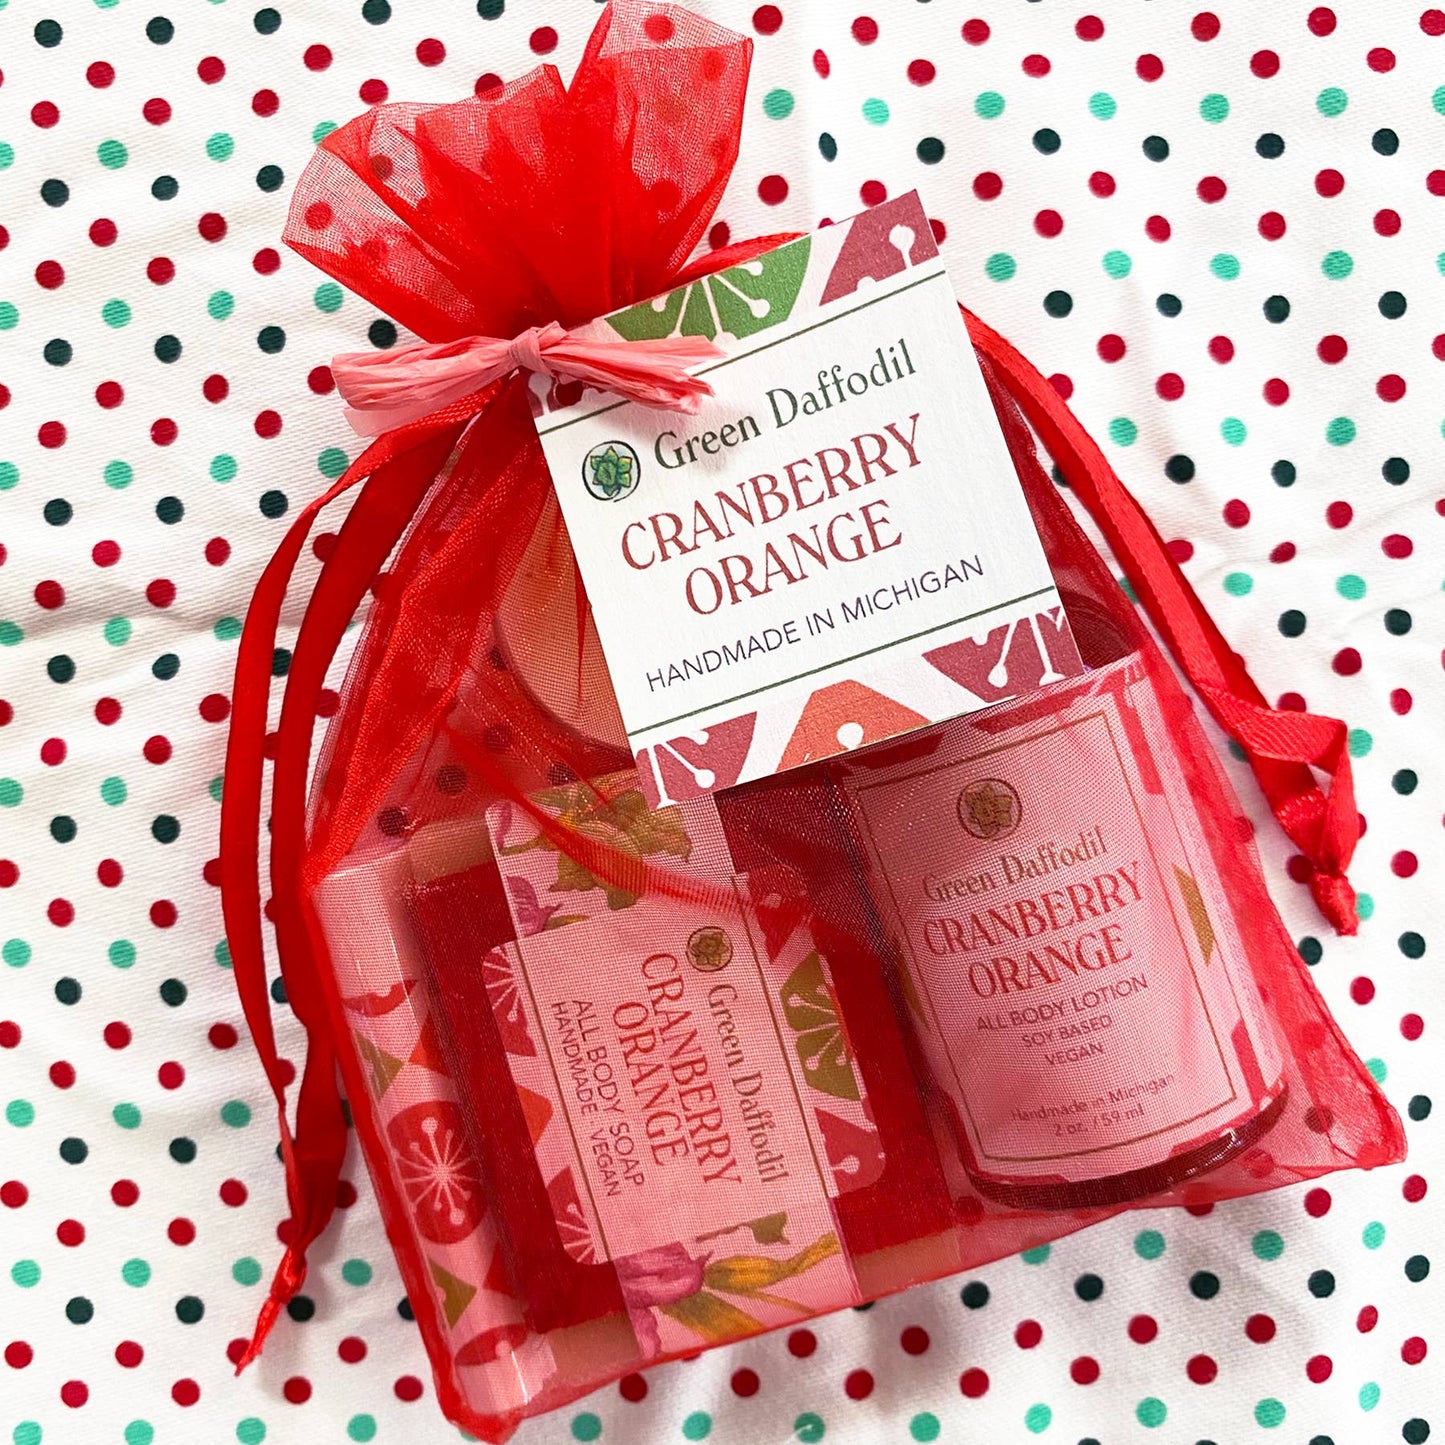 Cranberry Orange Organdy Quartet Gift Set